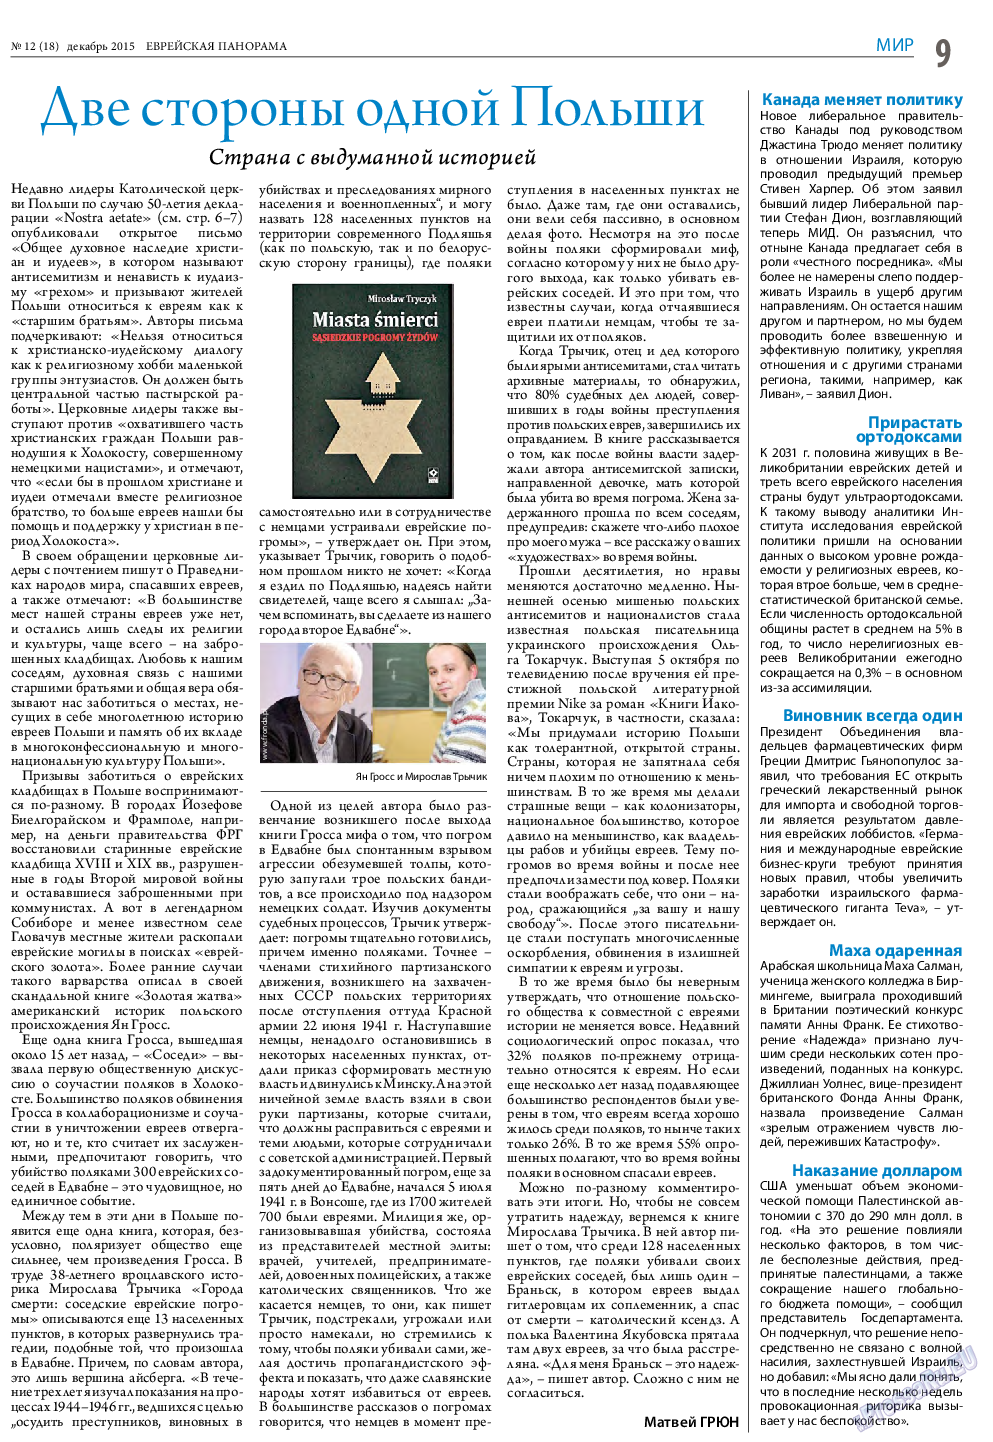 Еврейская панорама, газета. 2015 №12 стр.9